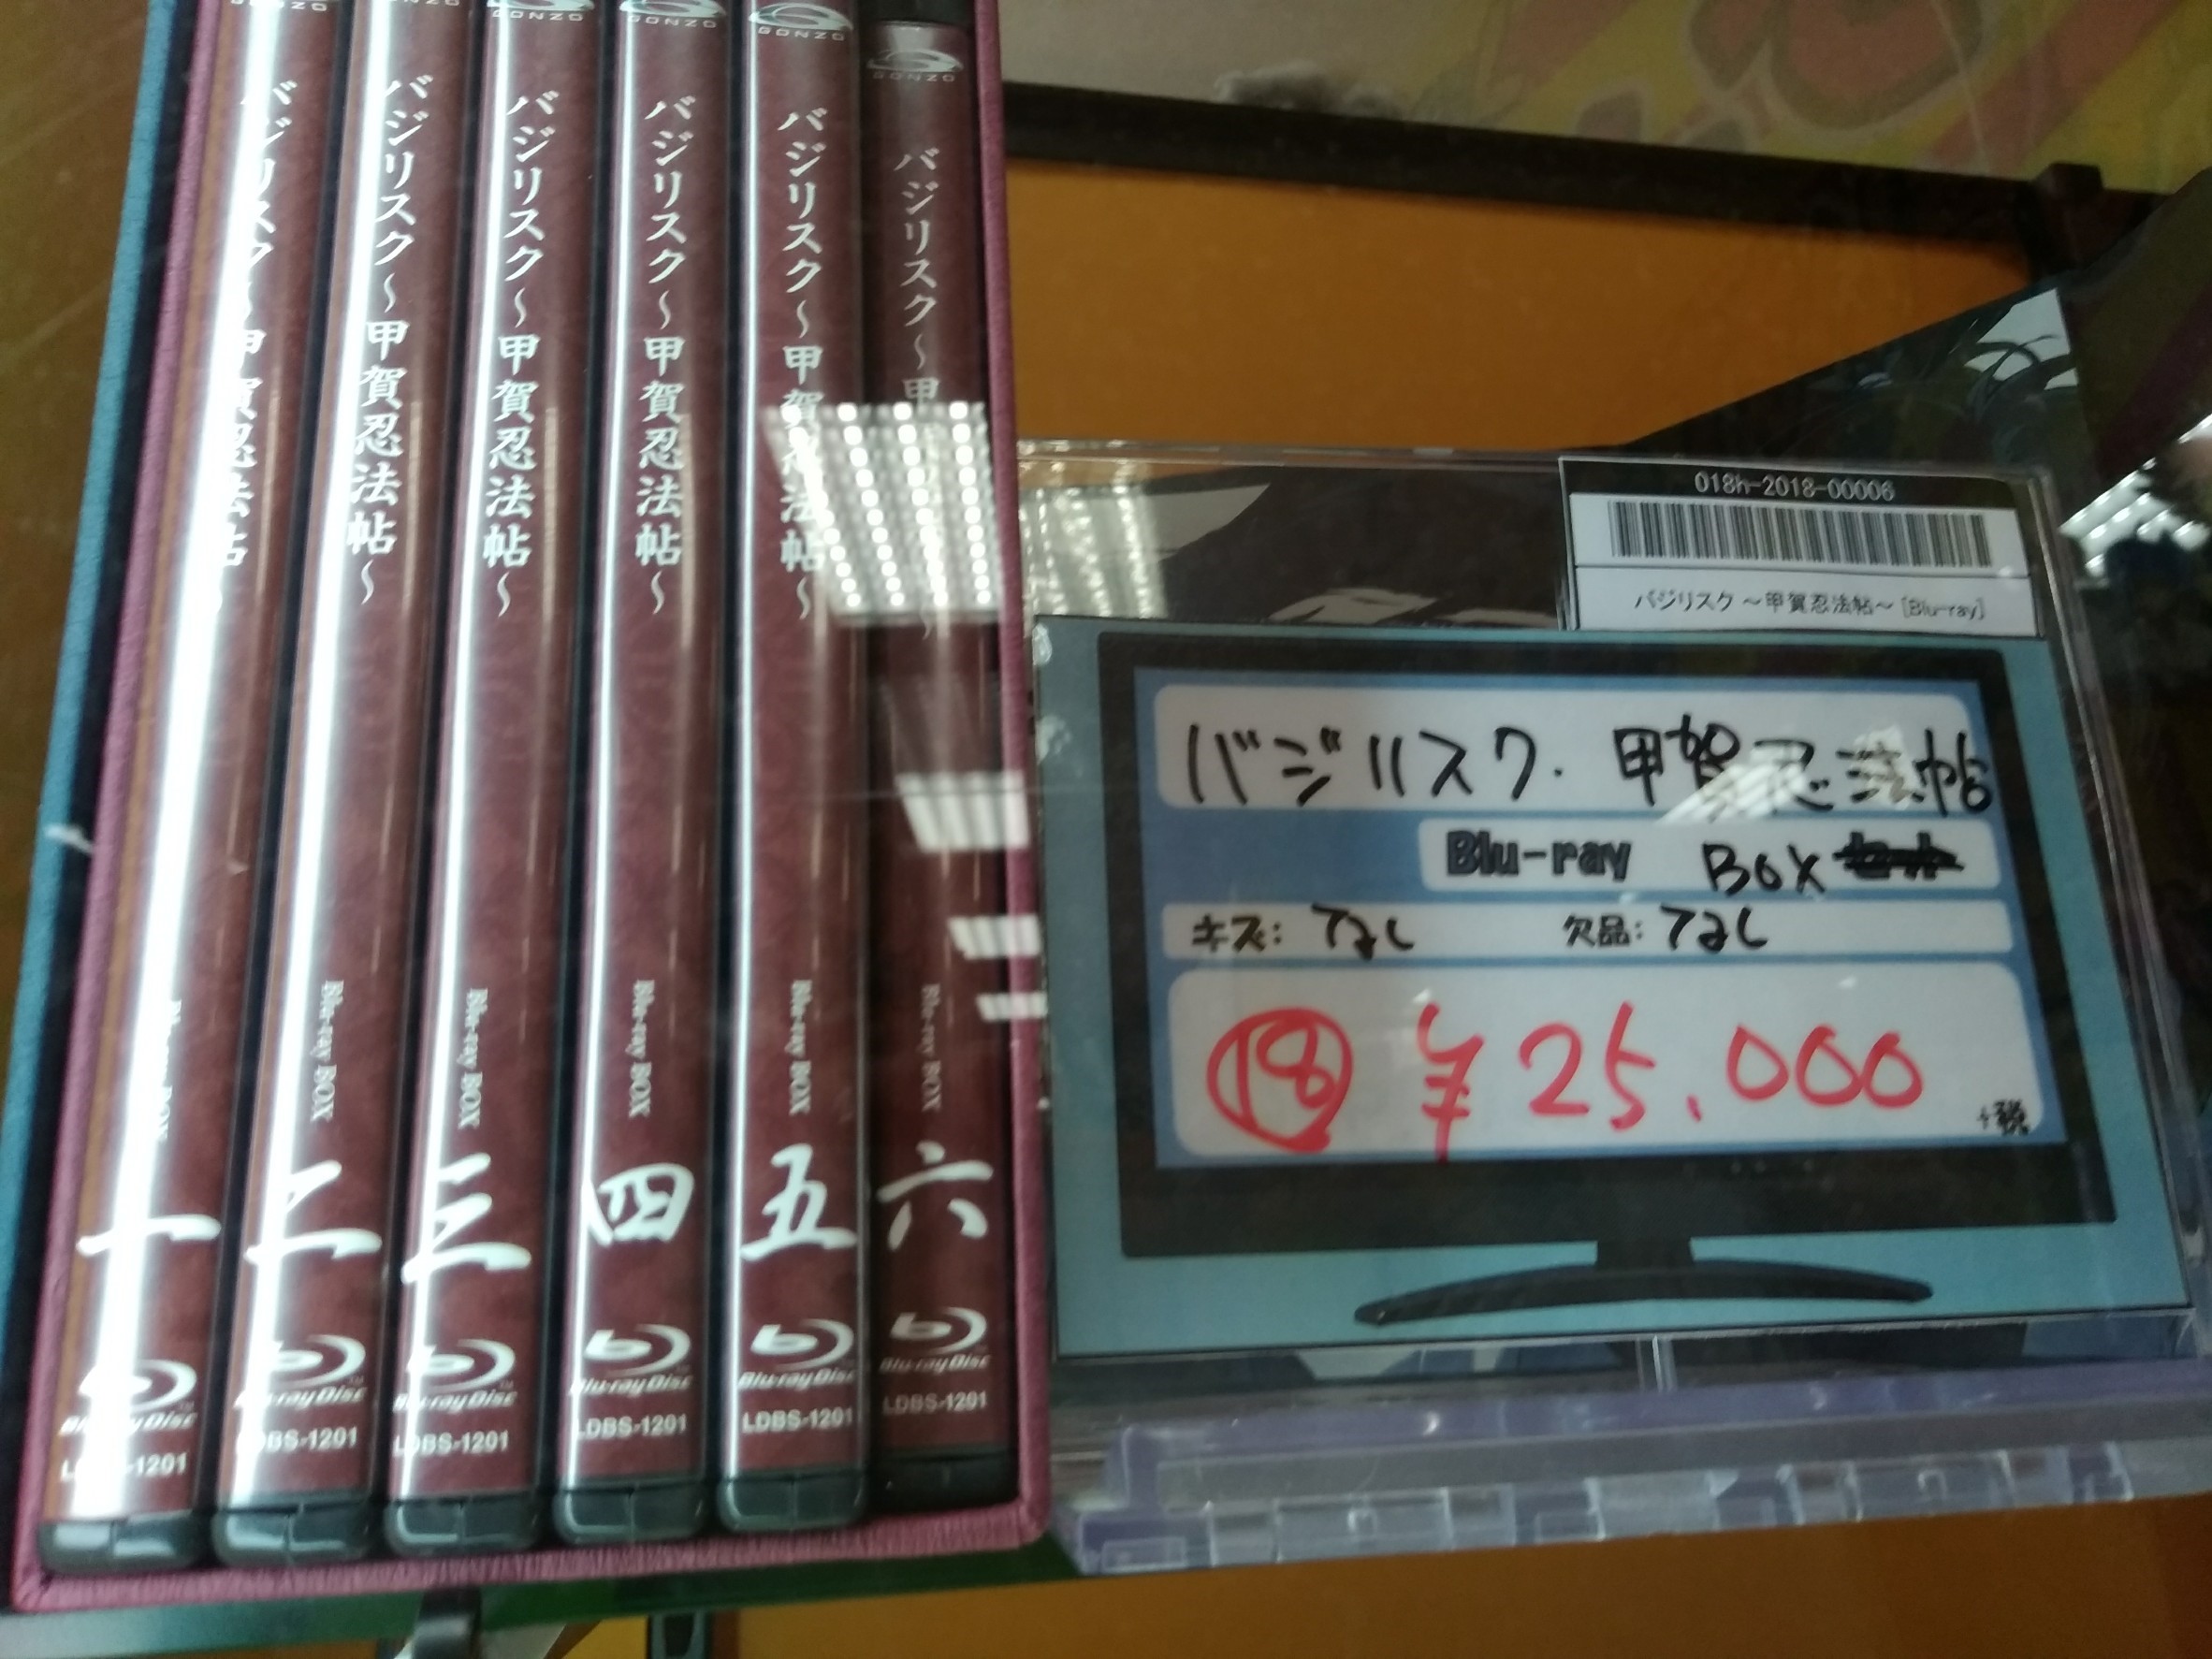 CD/DVD】9/7 本日のお品書きです！『安室奈美恵 ライブDVDセット